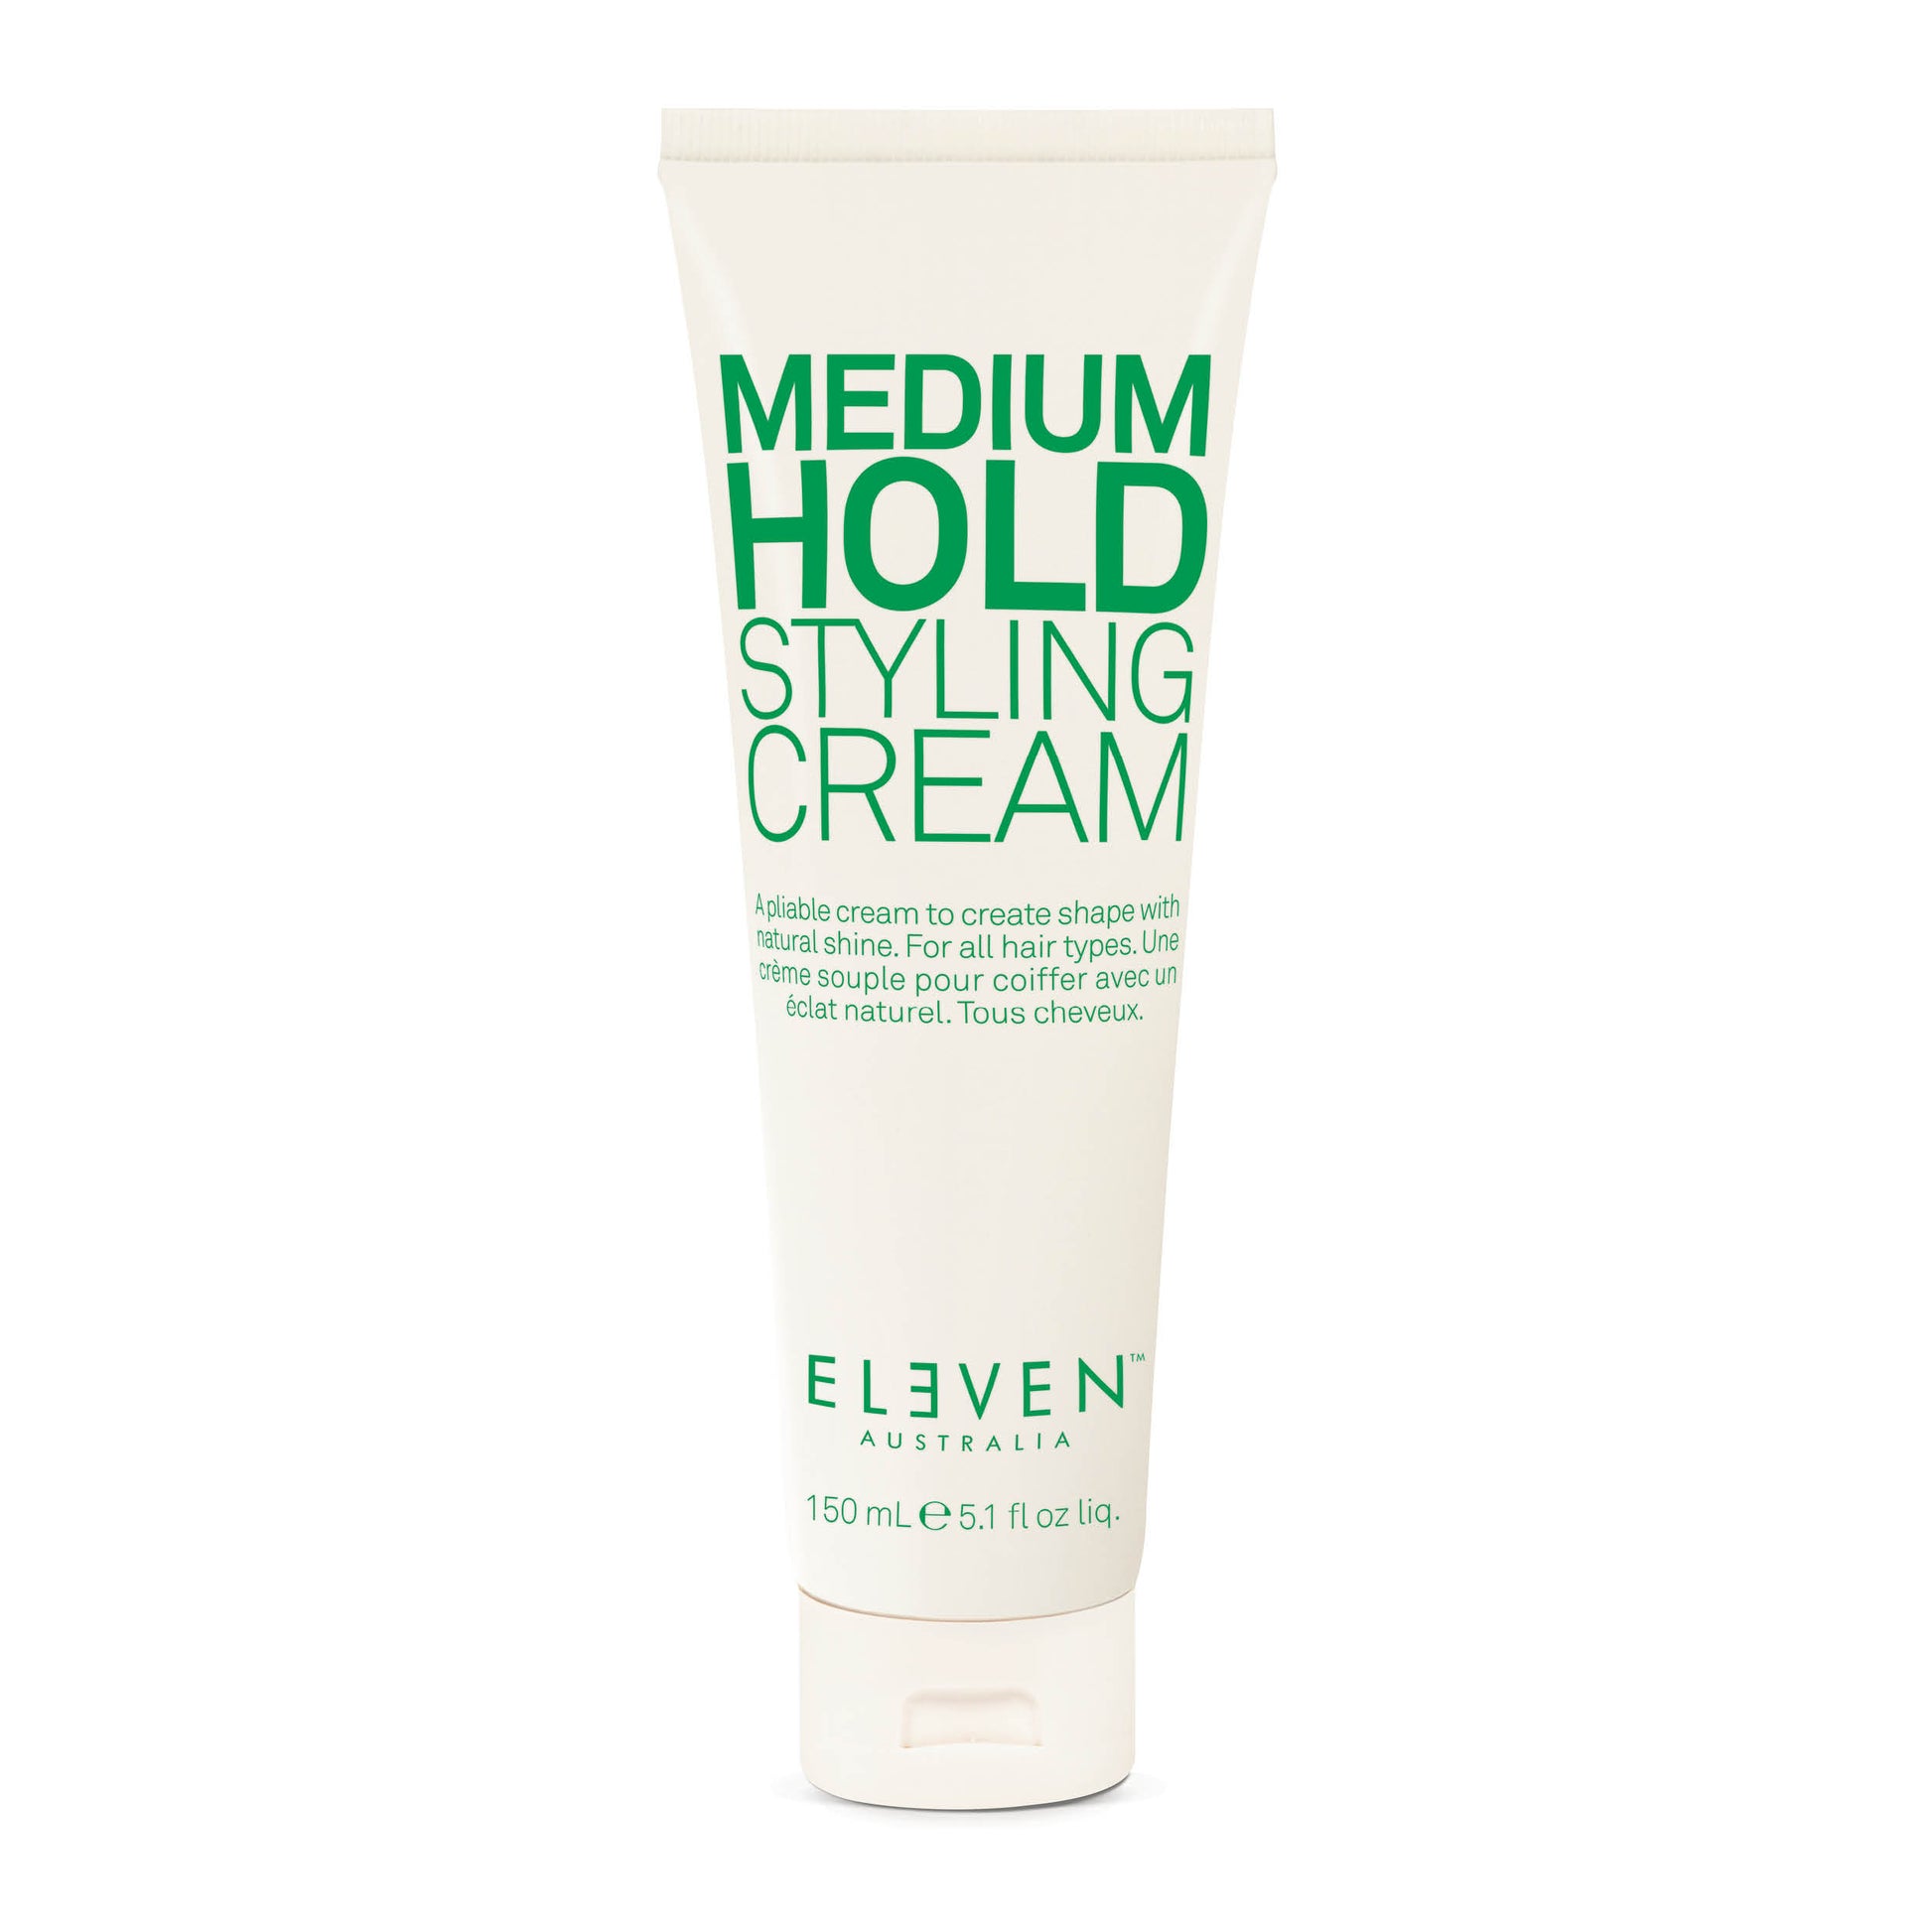 Eleven Medium Hold Styling Cream.